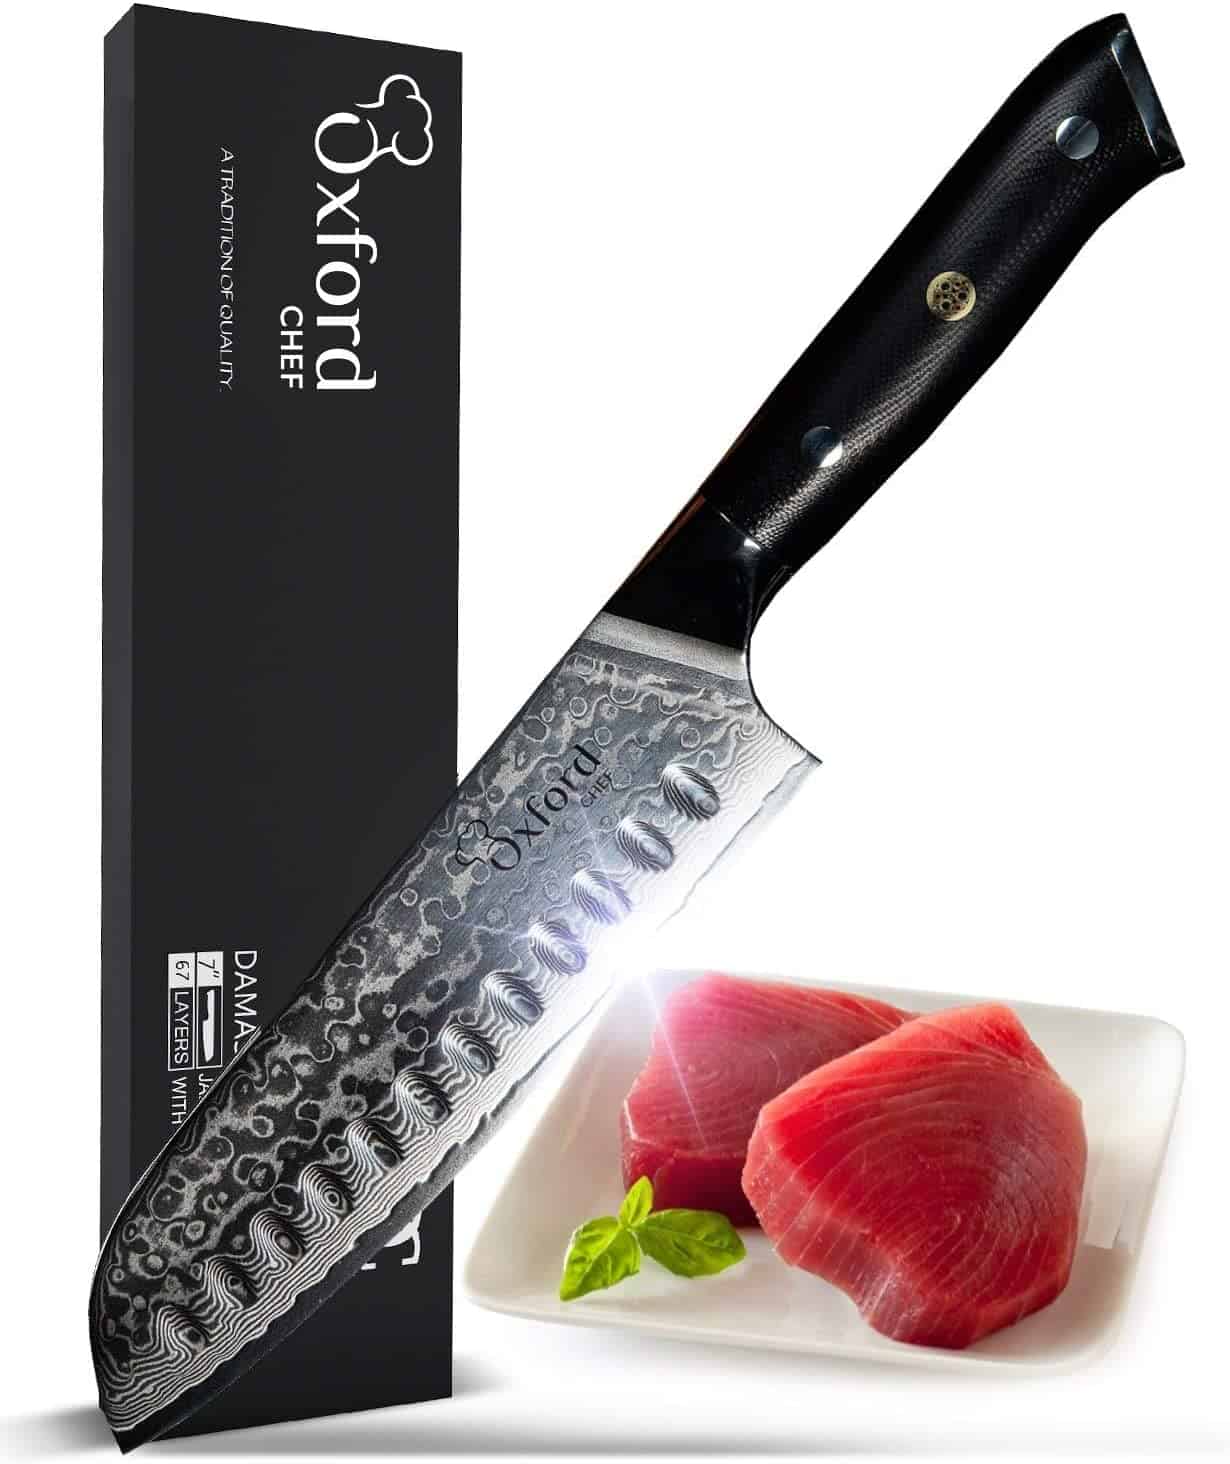 Best sushi knife for cutting rolls- Oxford Chef Santoku Knife